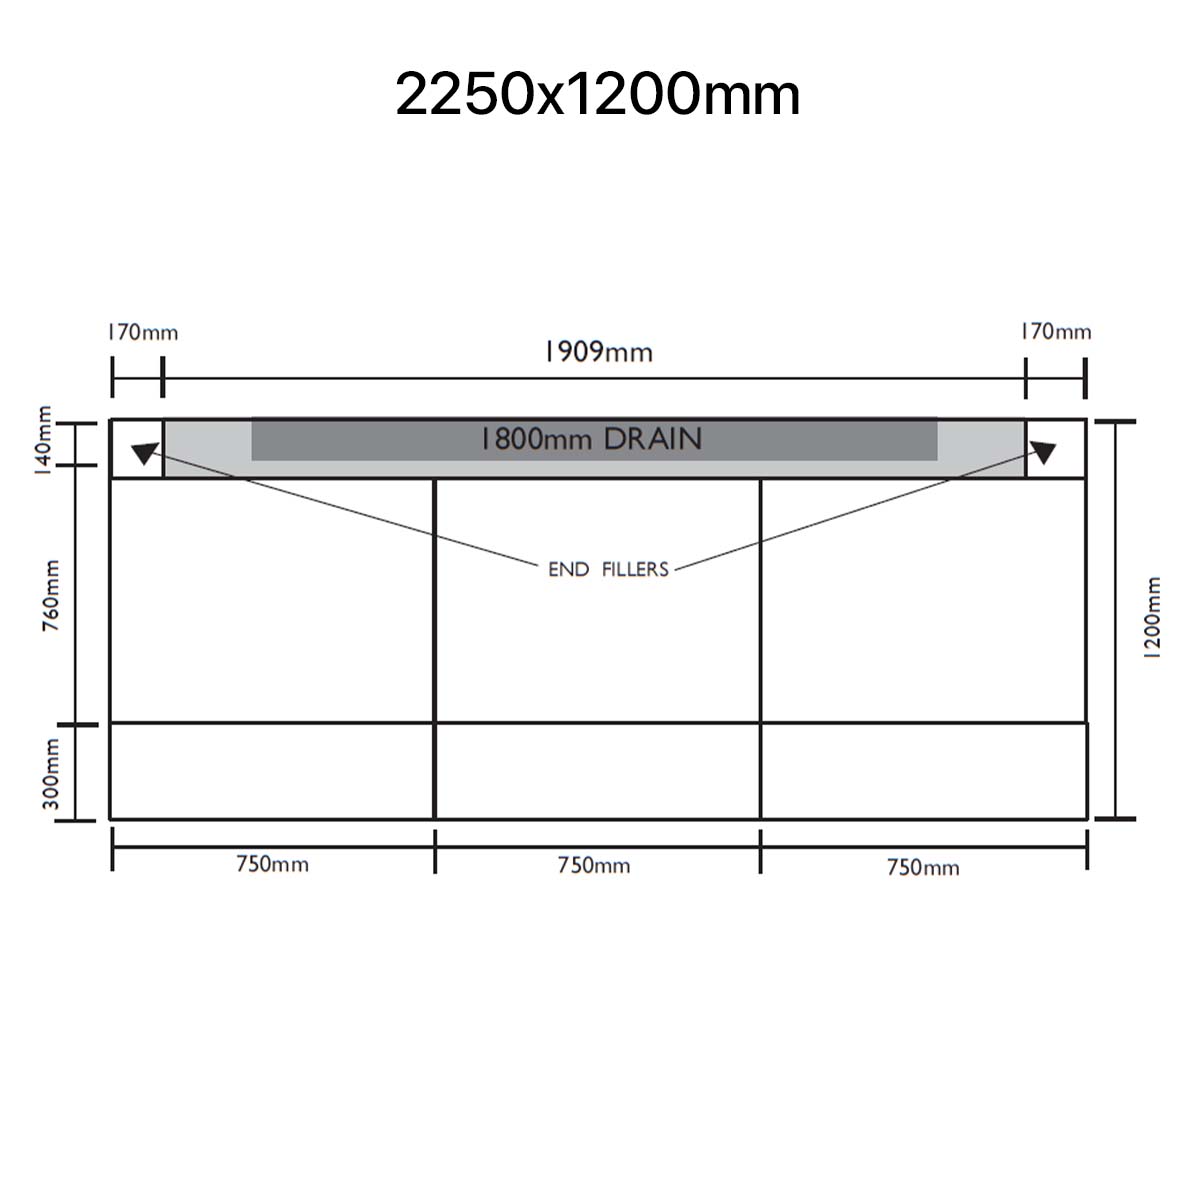 Unislope 1K elegance linear drain 2250x1200mm dimensions